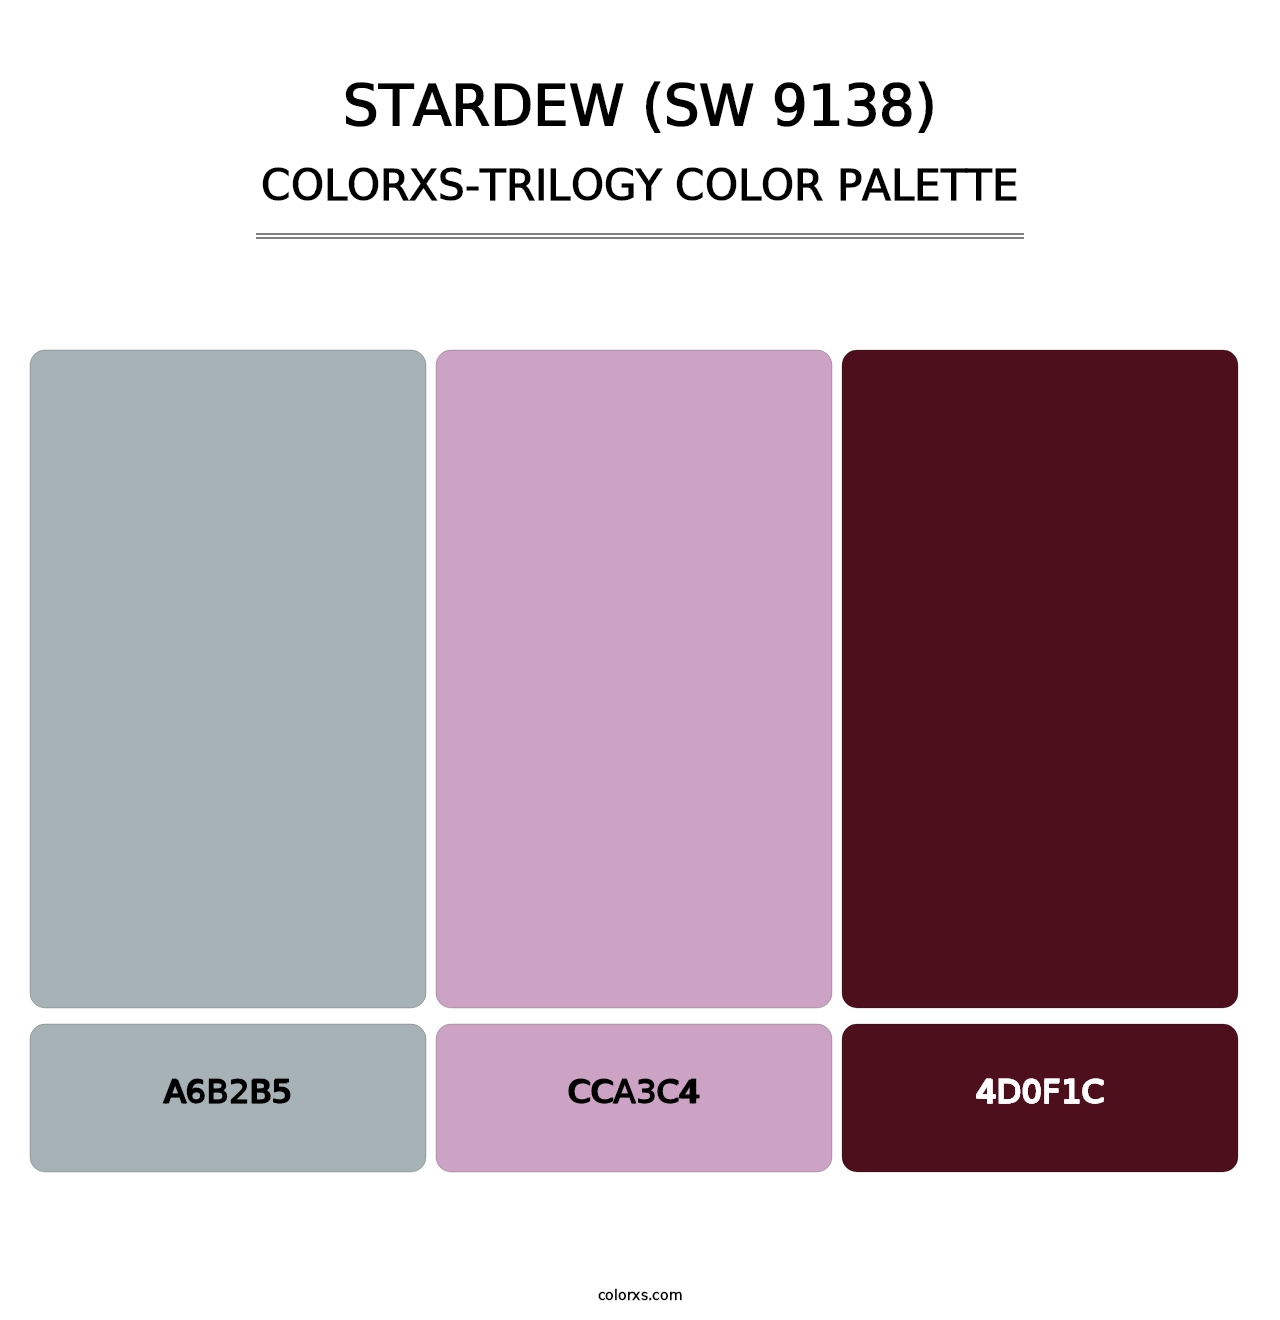 Stardew (SW 9138) - Colorxs Trilogy Palette